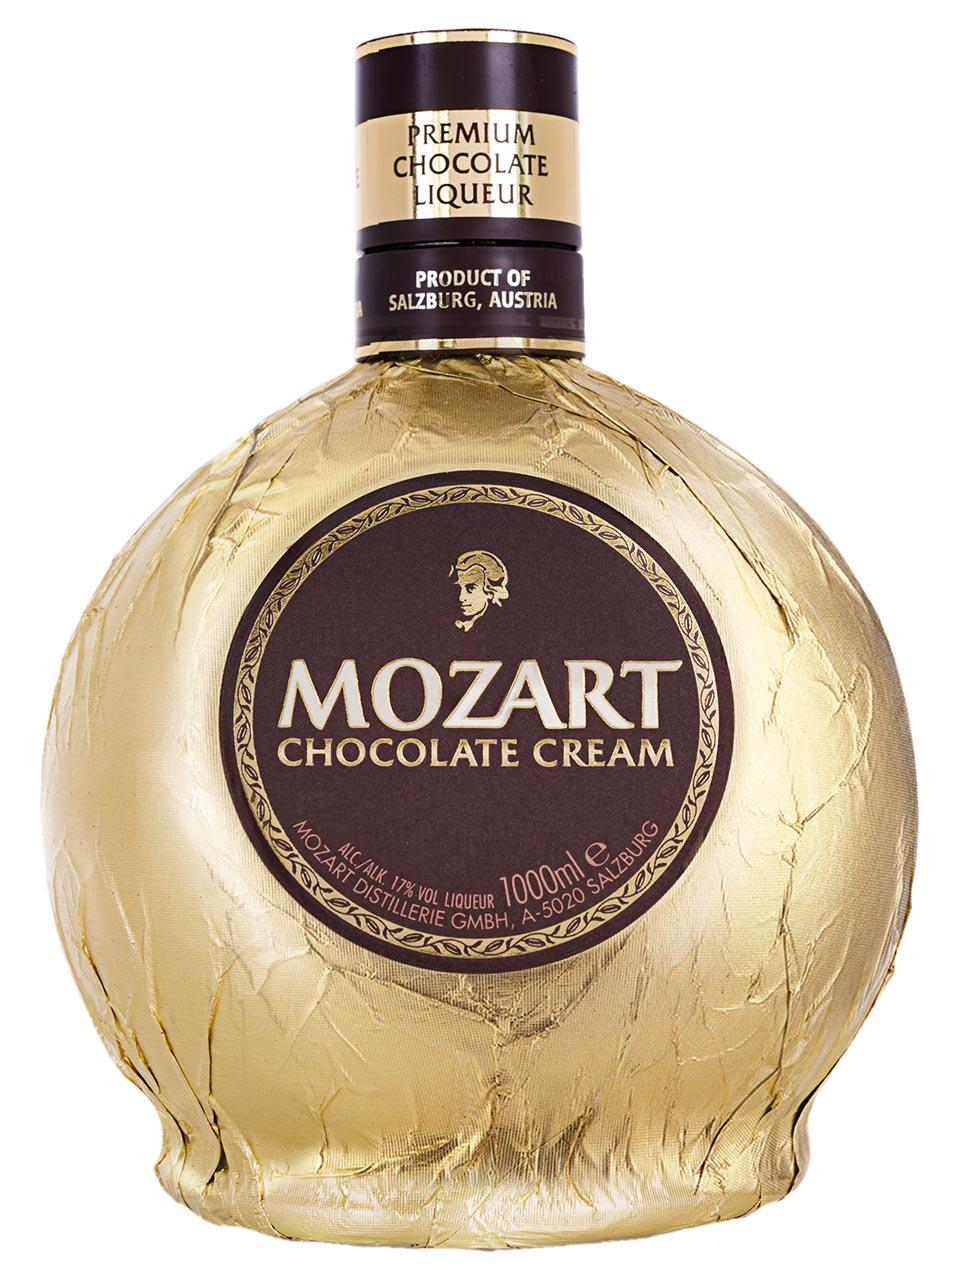 Mozart Chocolate Cream Likör 17% 1L | Frankfurt Airport Online Shopping